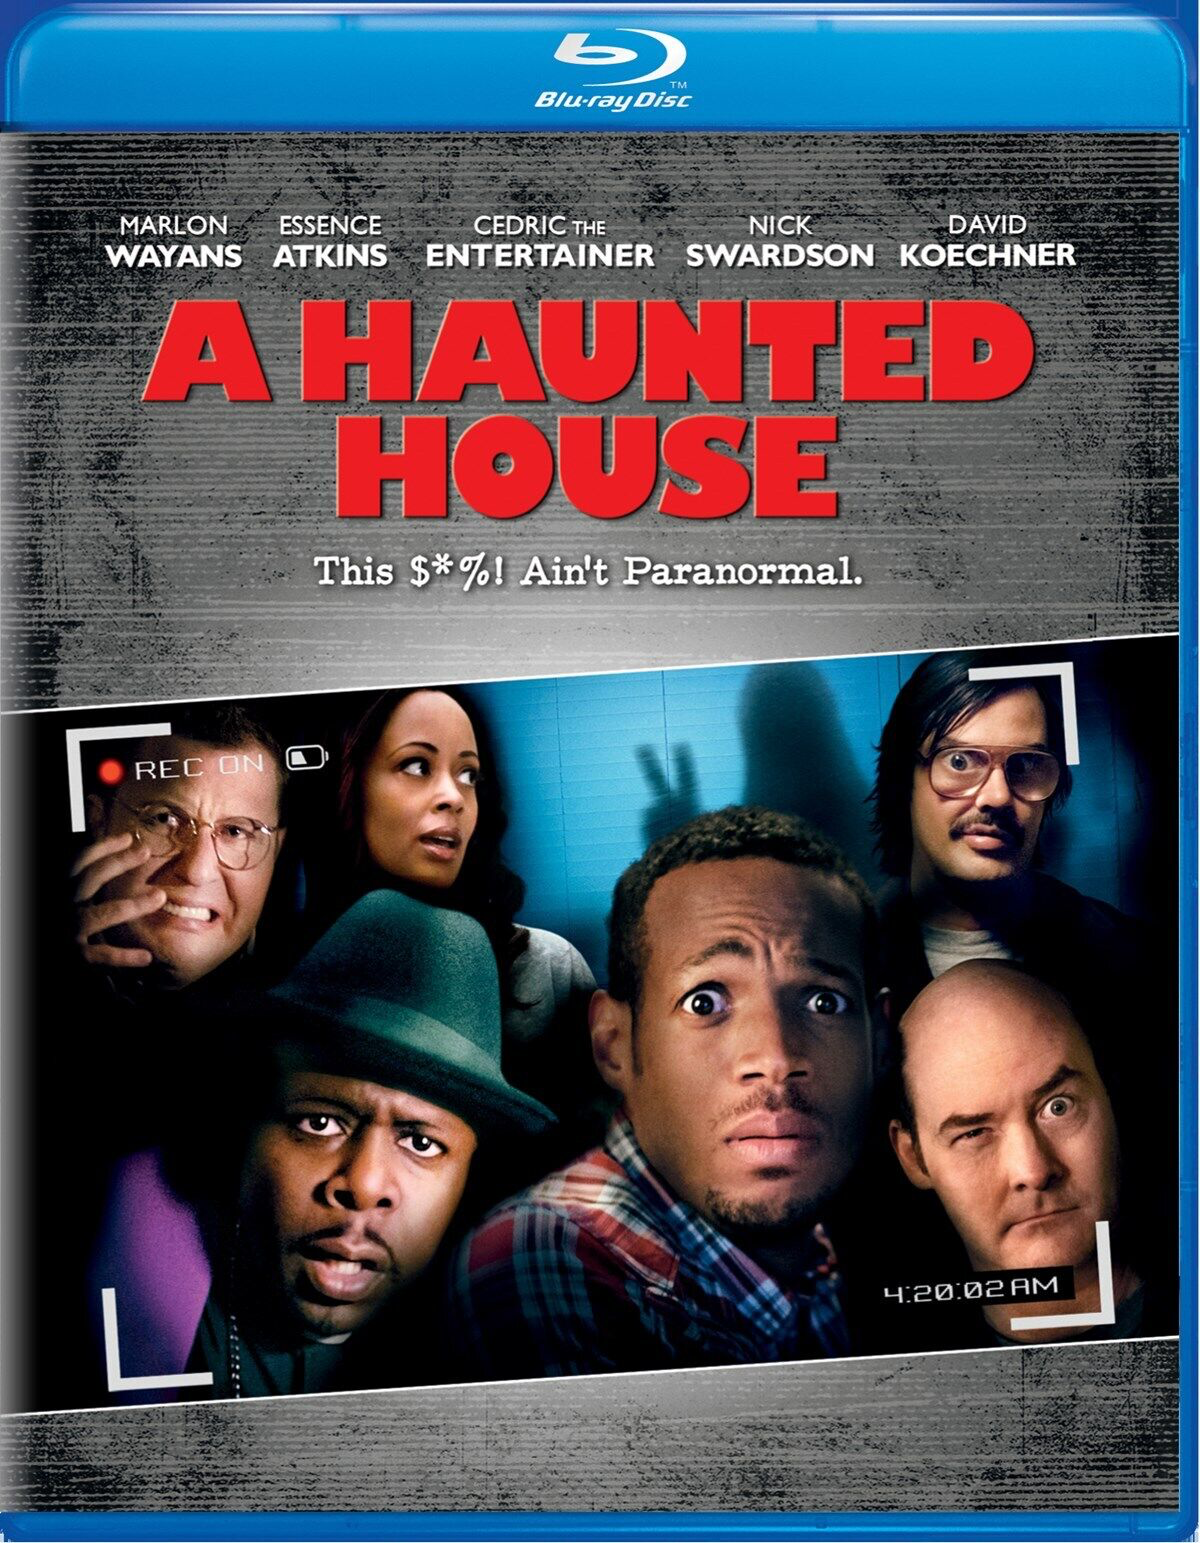 Haunted House - Blu-ray Comedy 2013 R